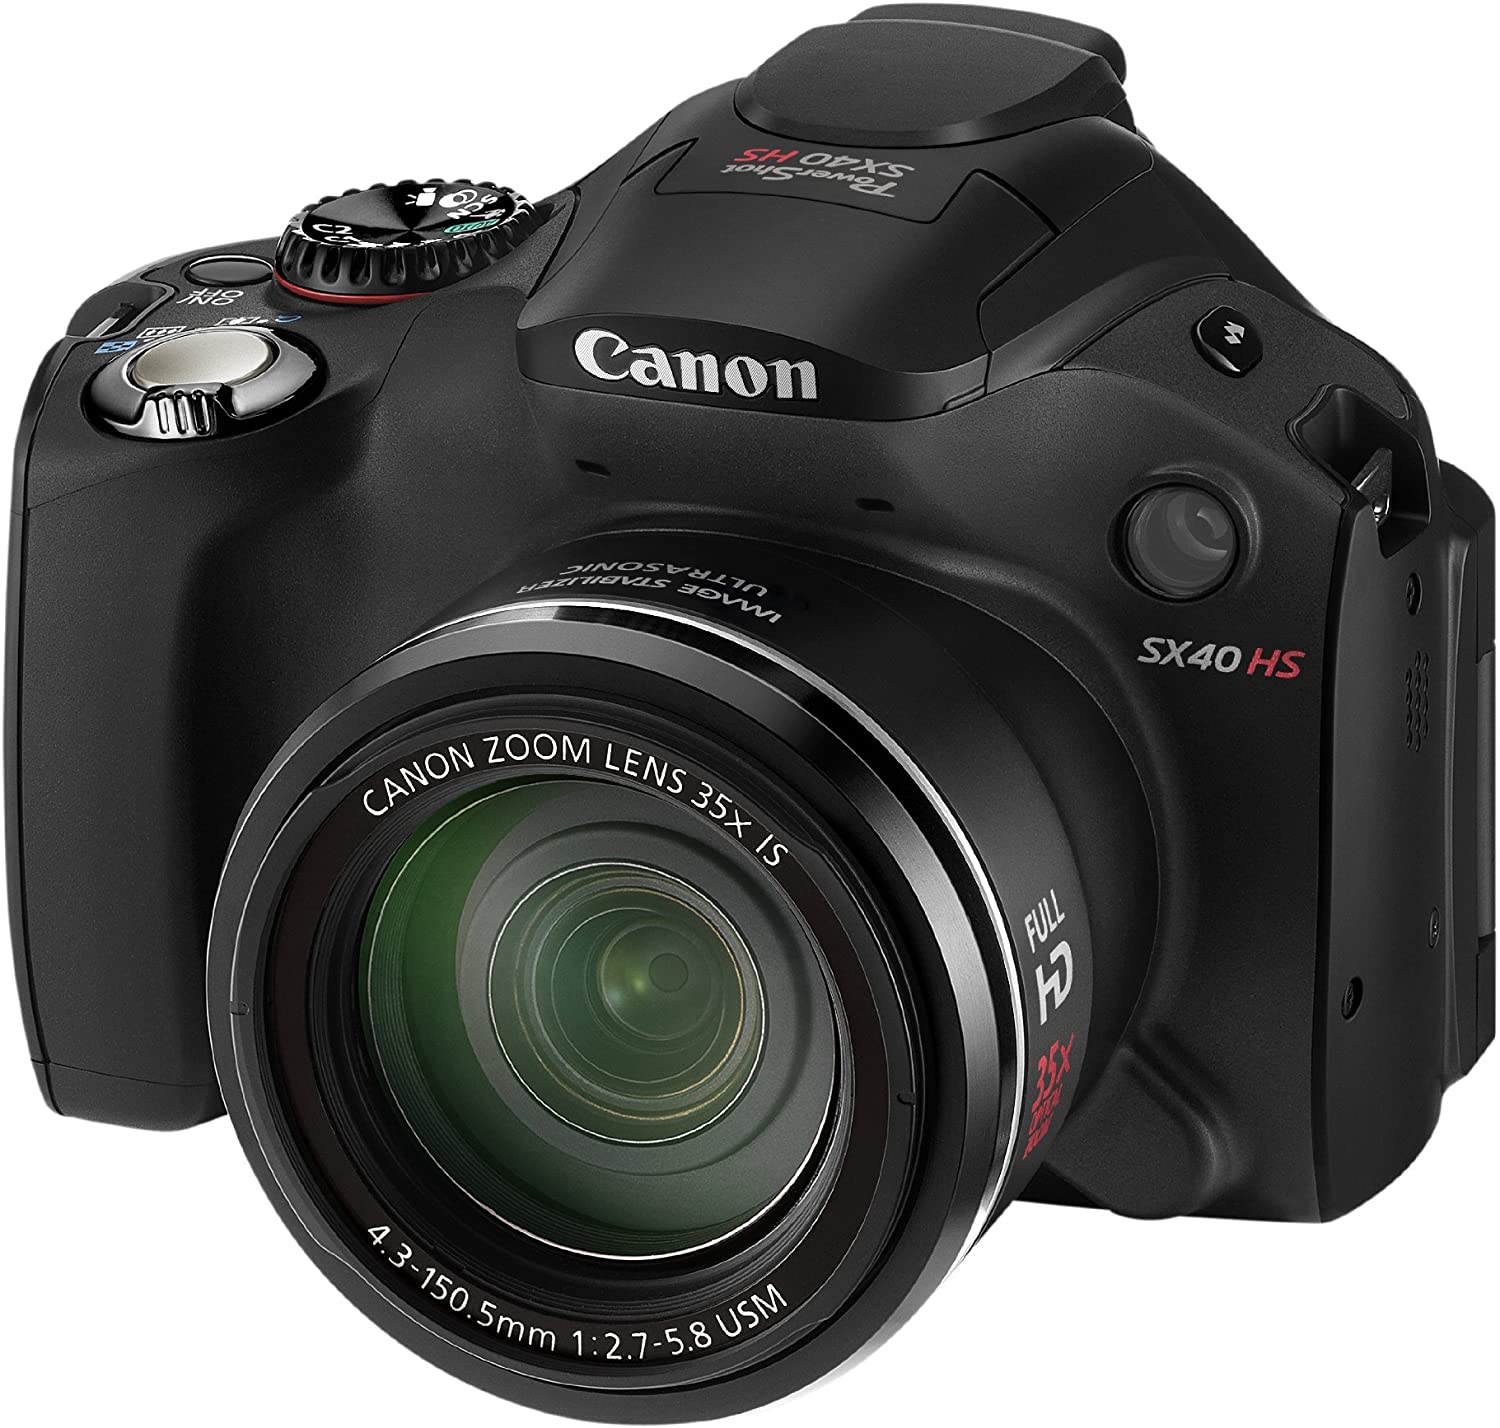 Canon PowerShot SX40 HS Camera